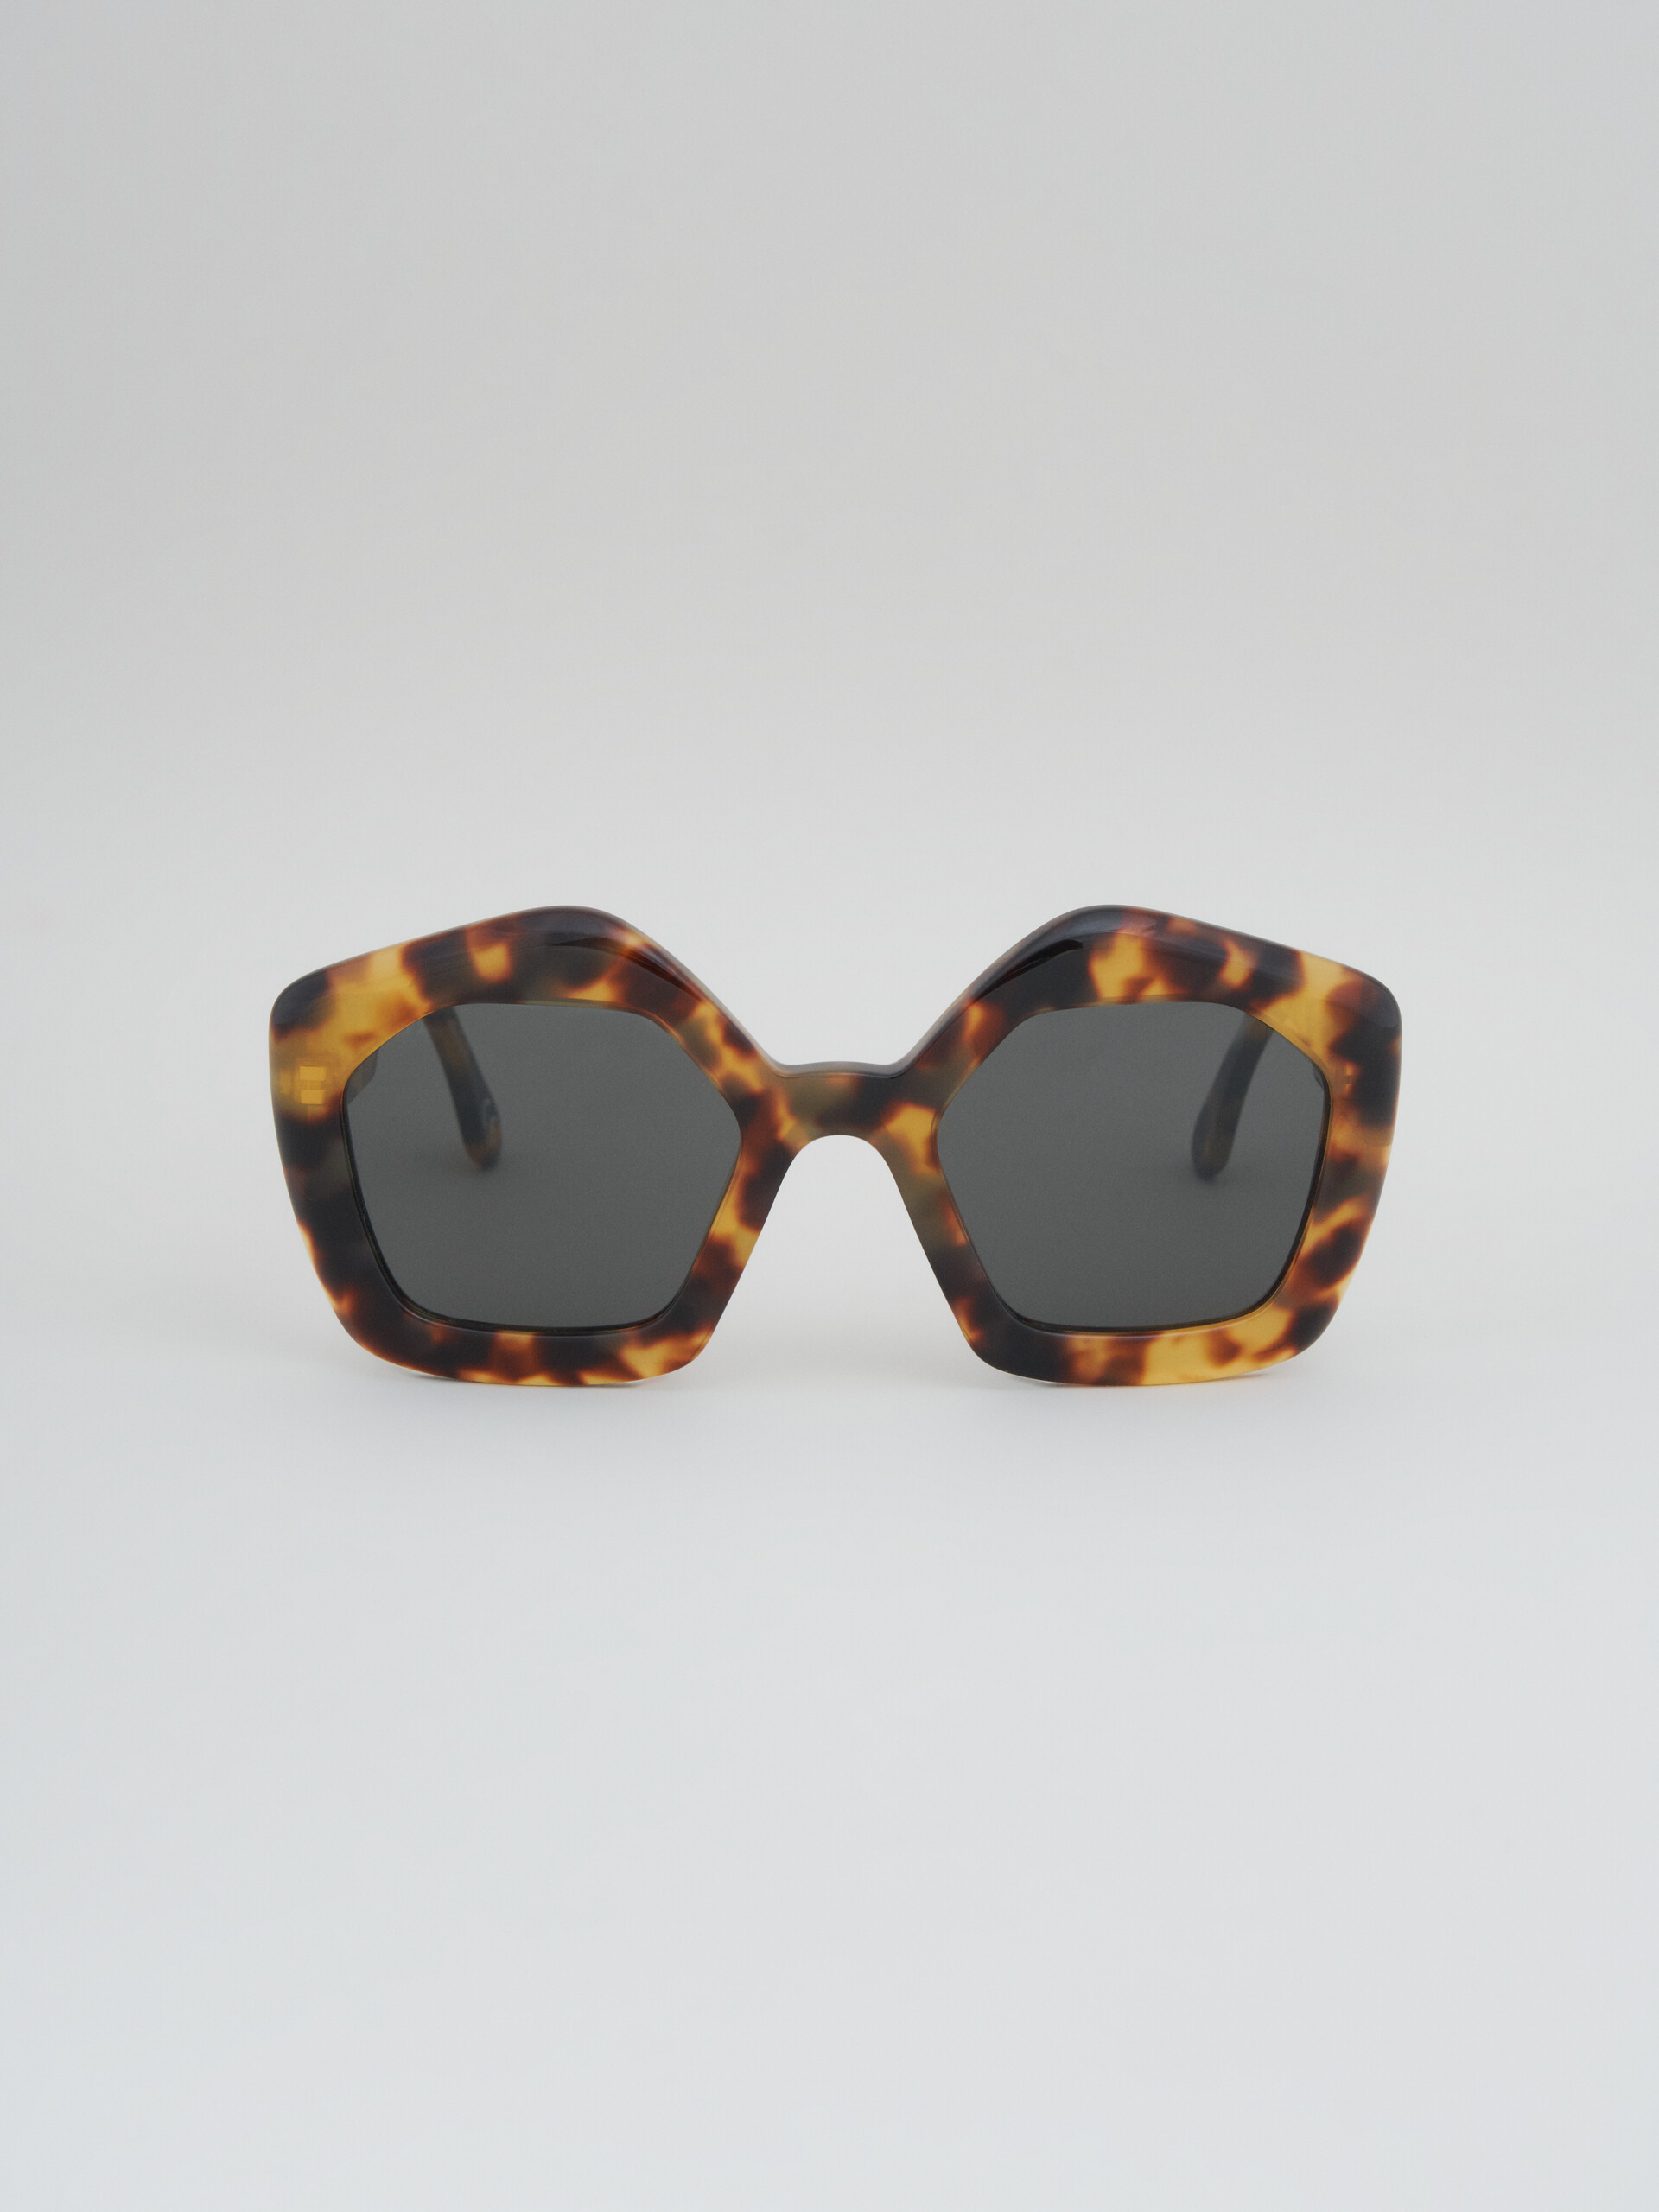 Tortoiseshell acetate LAUGHING WATERS sunglasses - Optical - Image 1